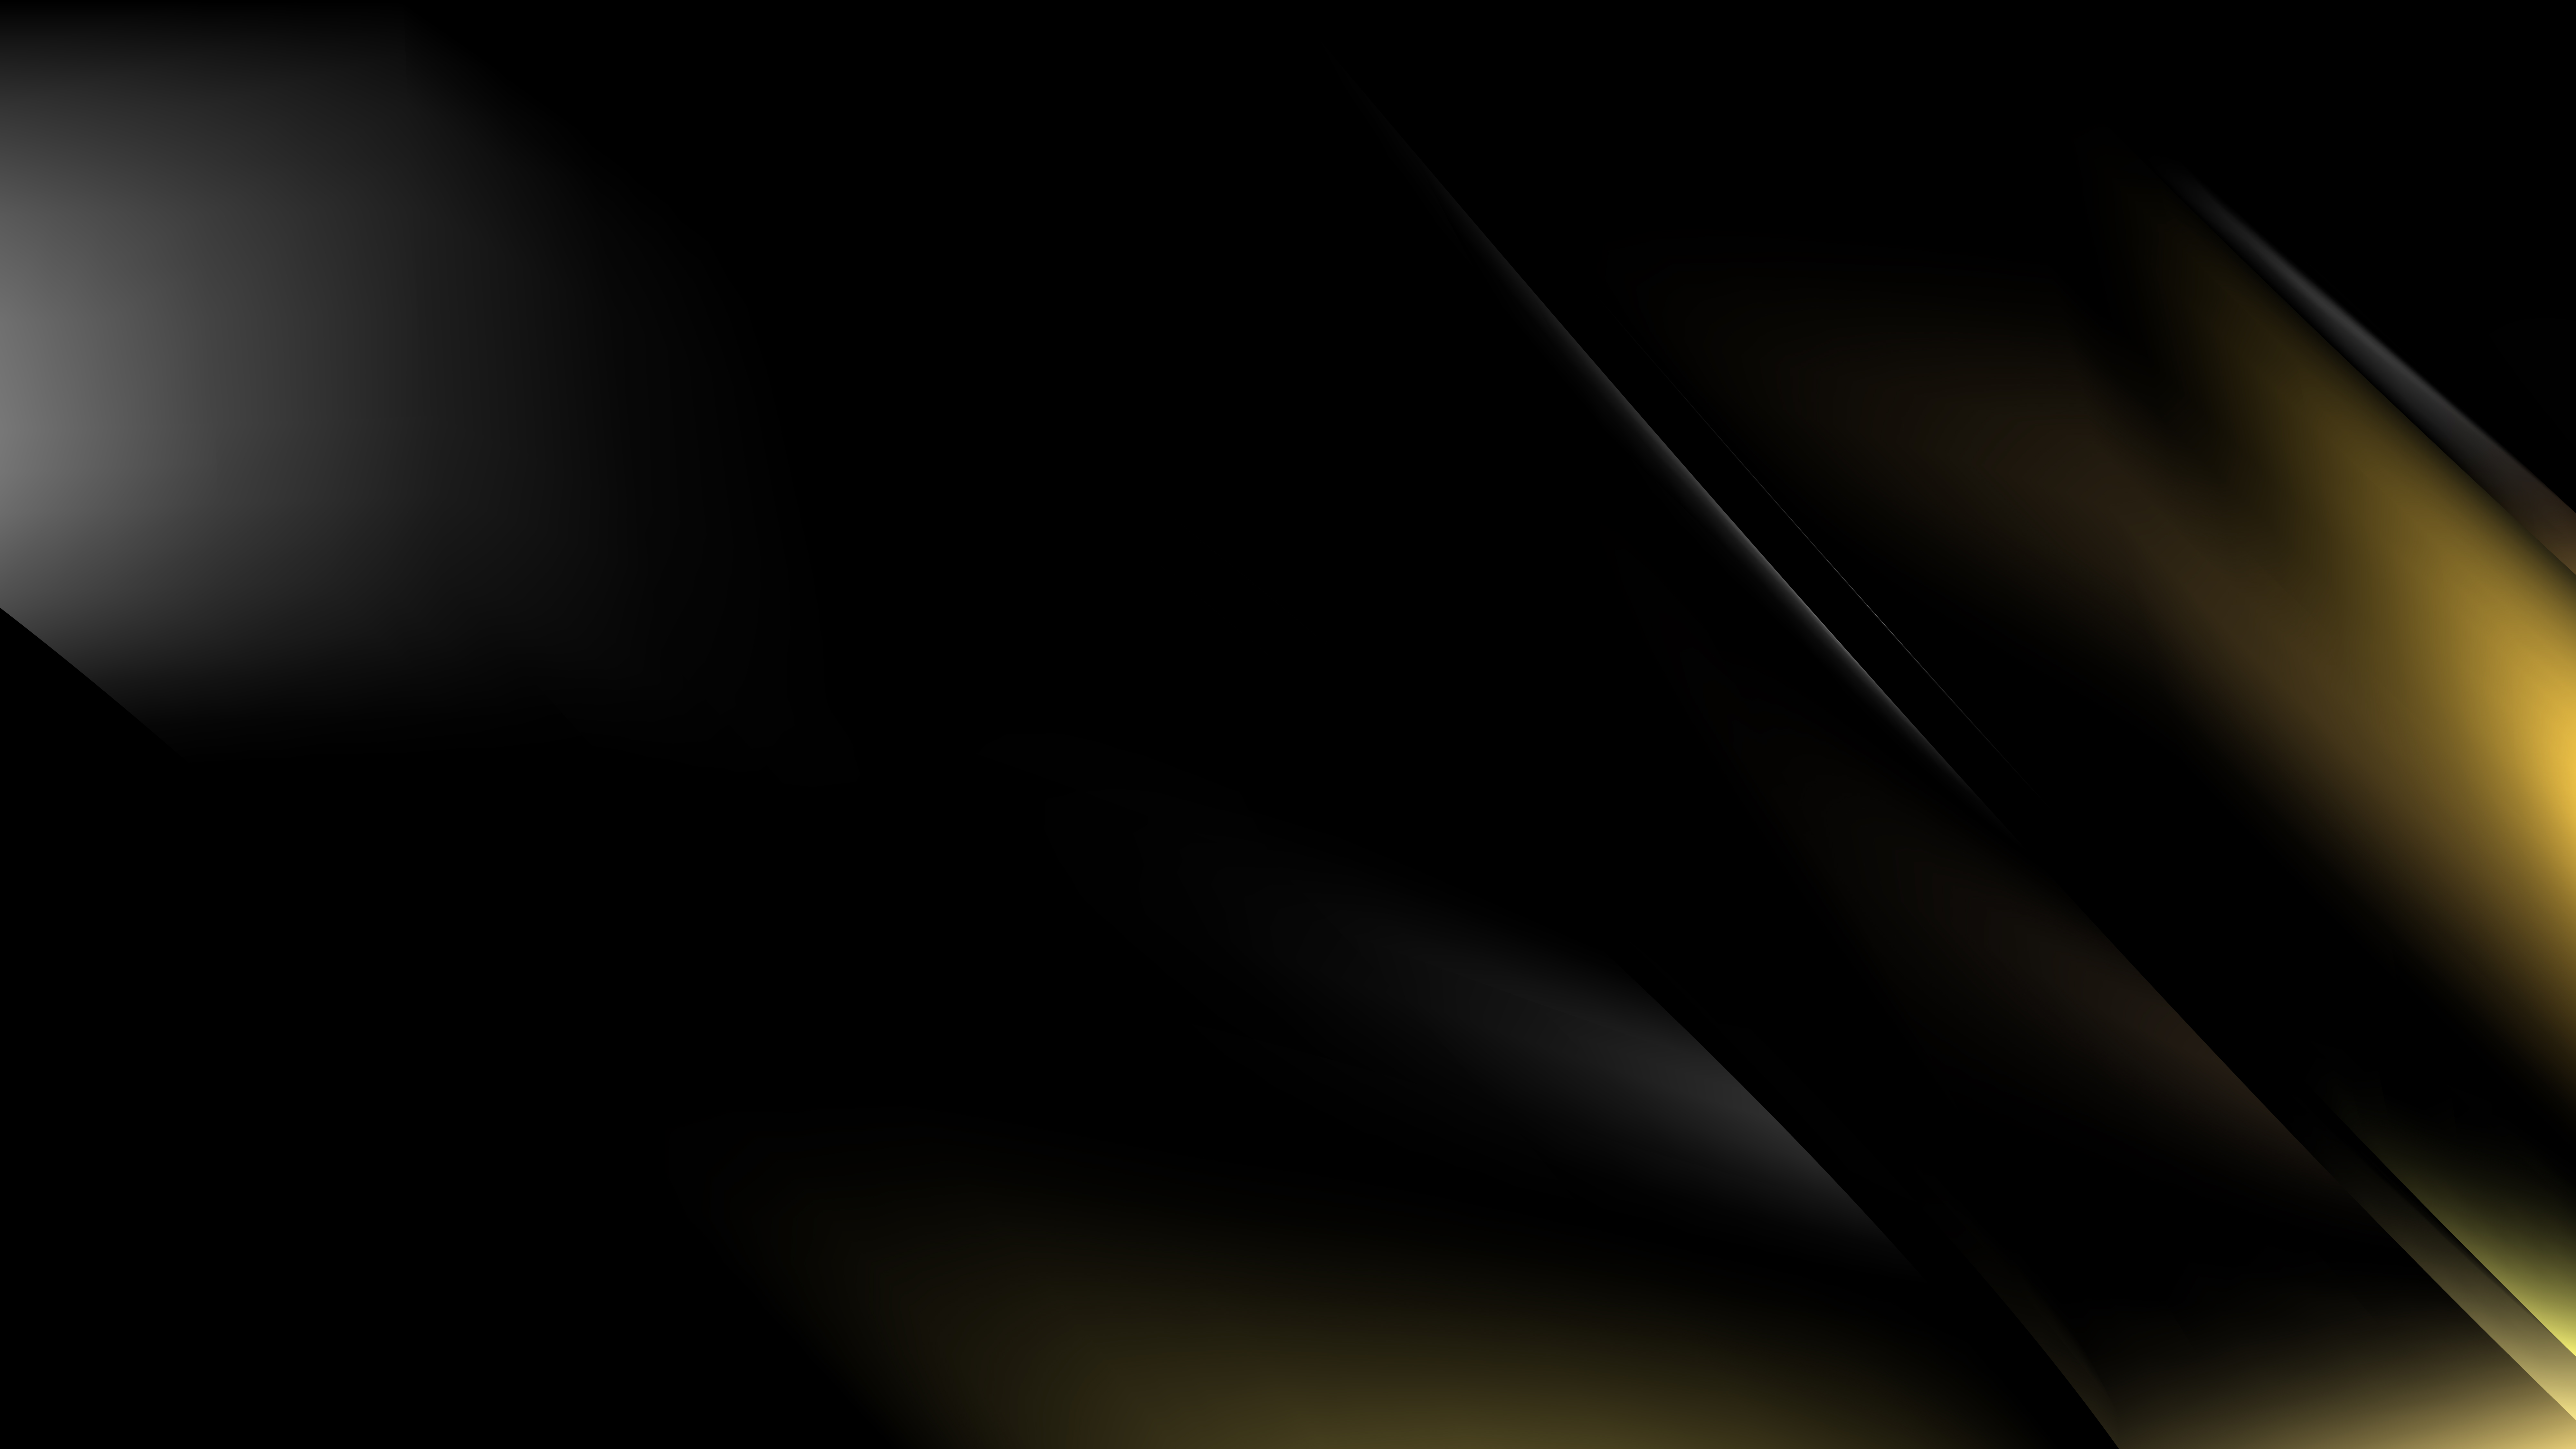 https://files.123freevectors.com/wp-content/original/150310-black-and-gold-diagonal-shiny-lines-background.jpg